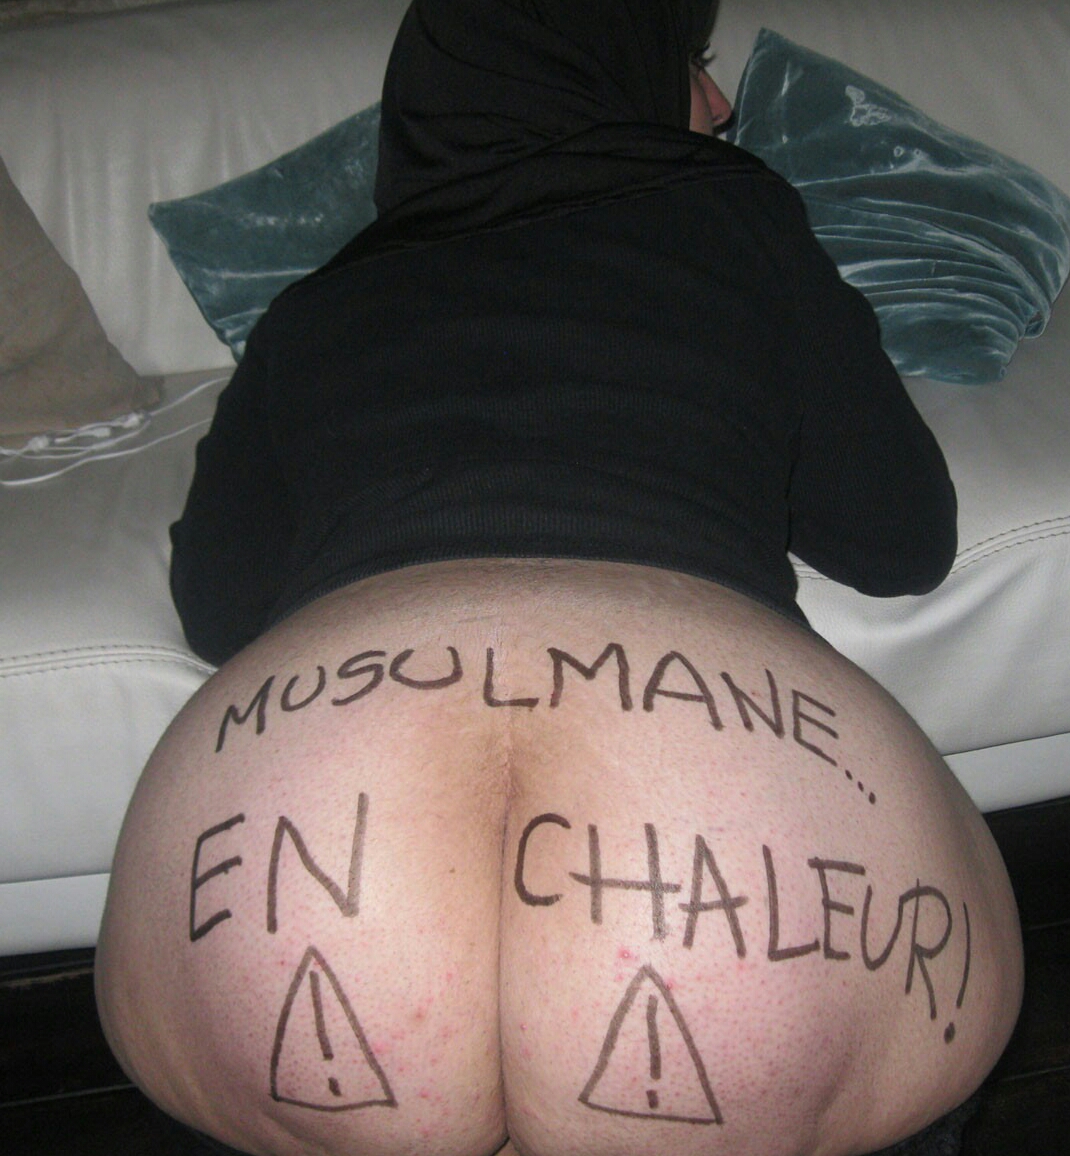 ass big_ass body_writing fat french french_text hijab muslim veil